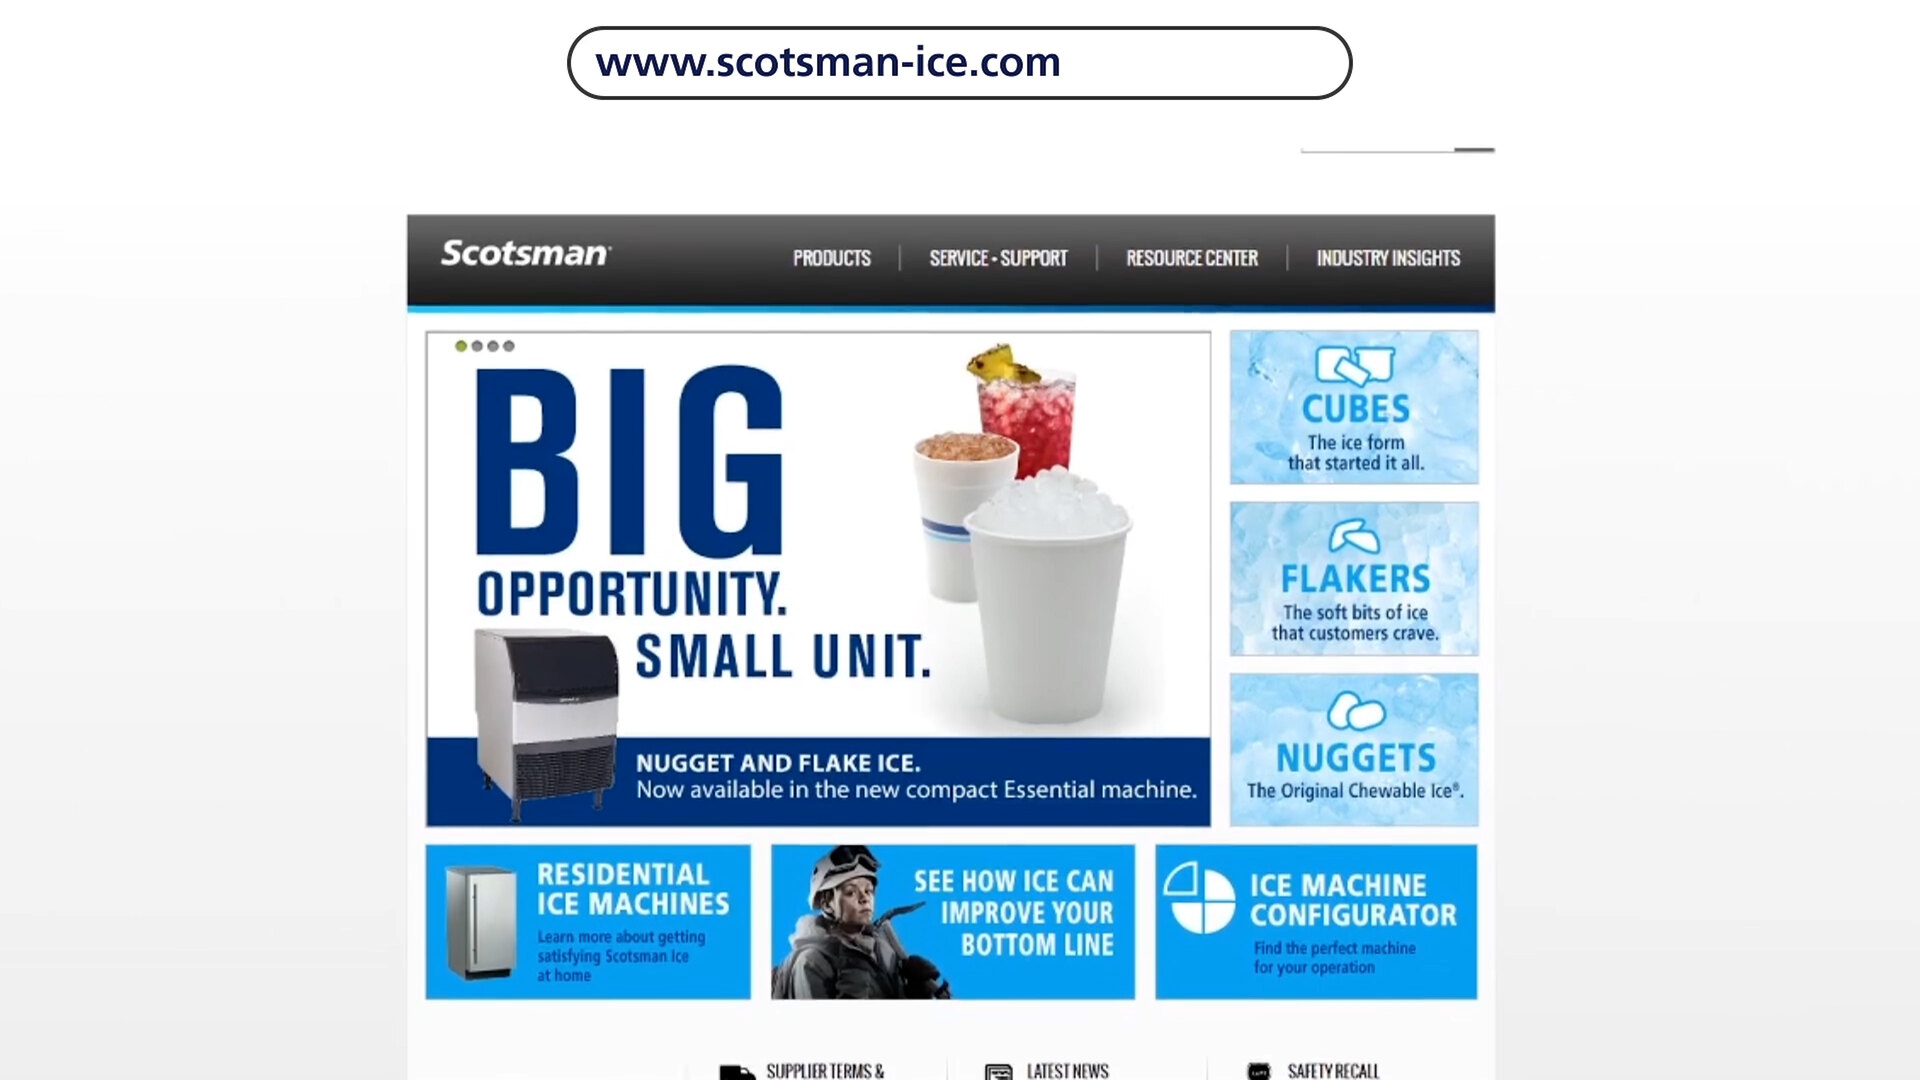 Scotsman 20 Wide Undercounter Ice Machine, Nugget Ice (167 lbs